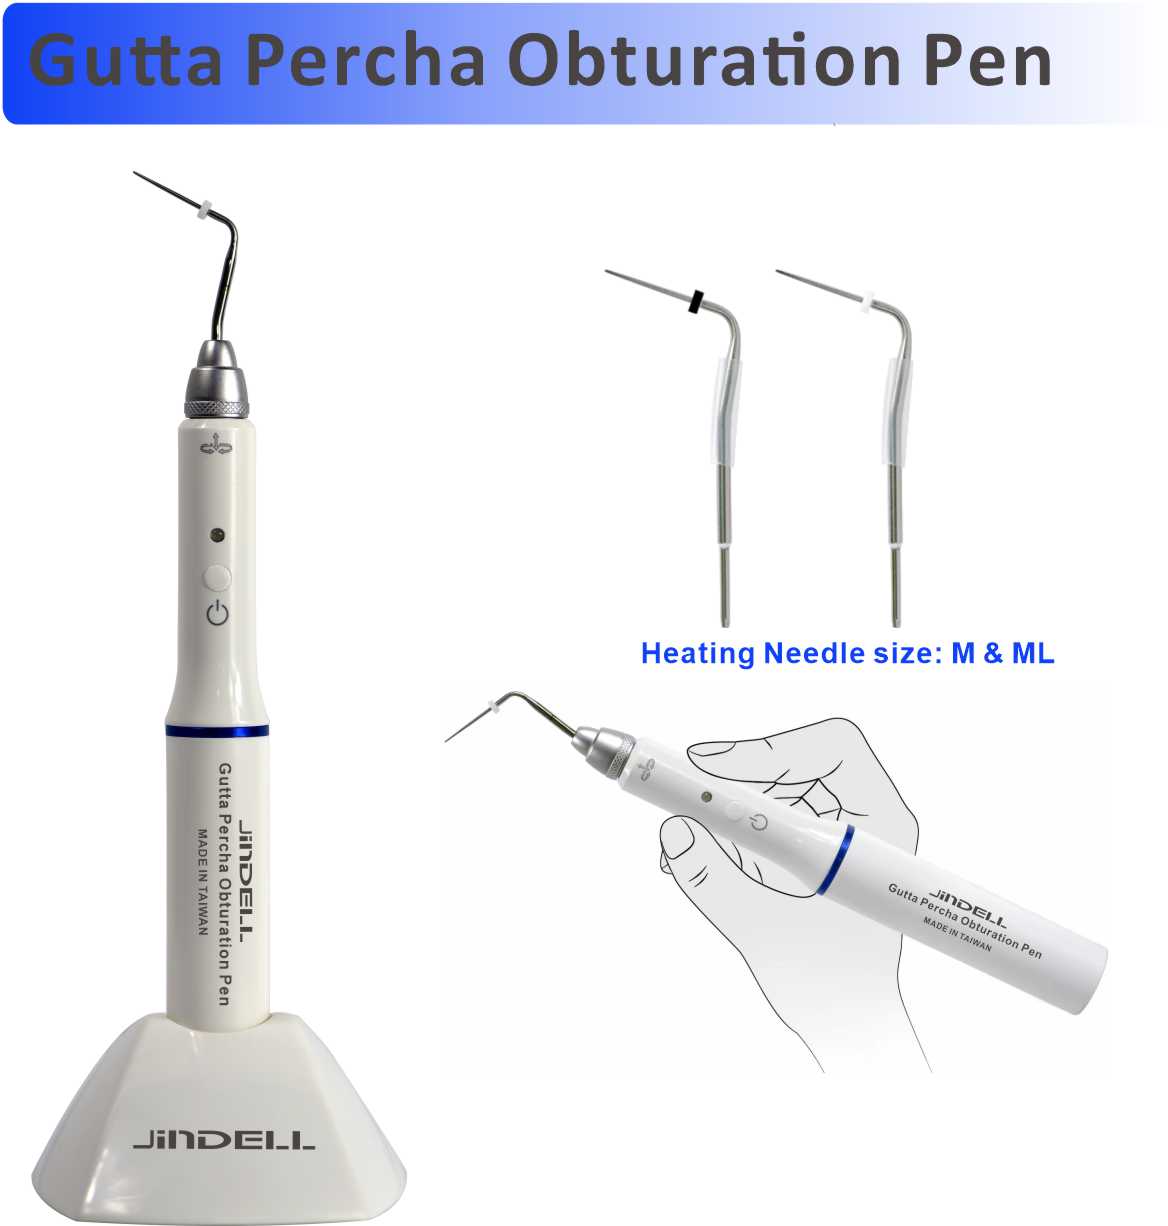 Gutta Percha Obturation Pen